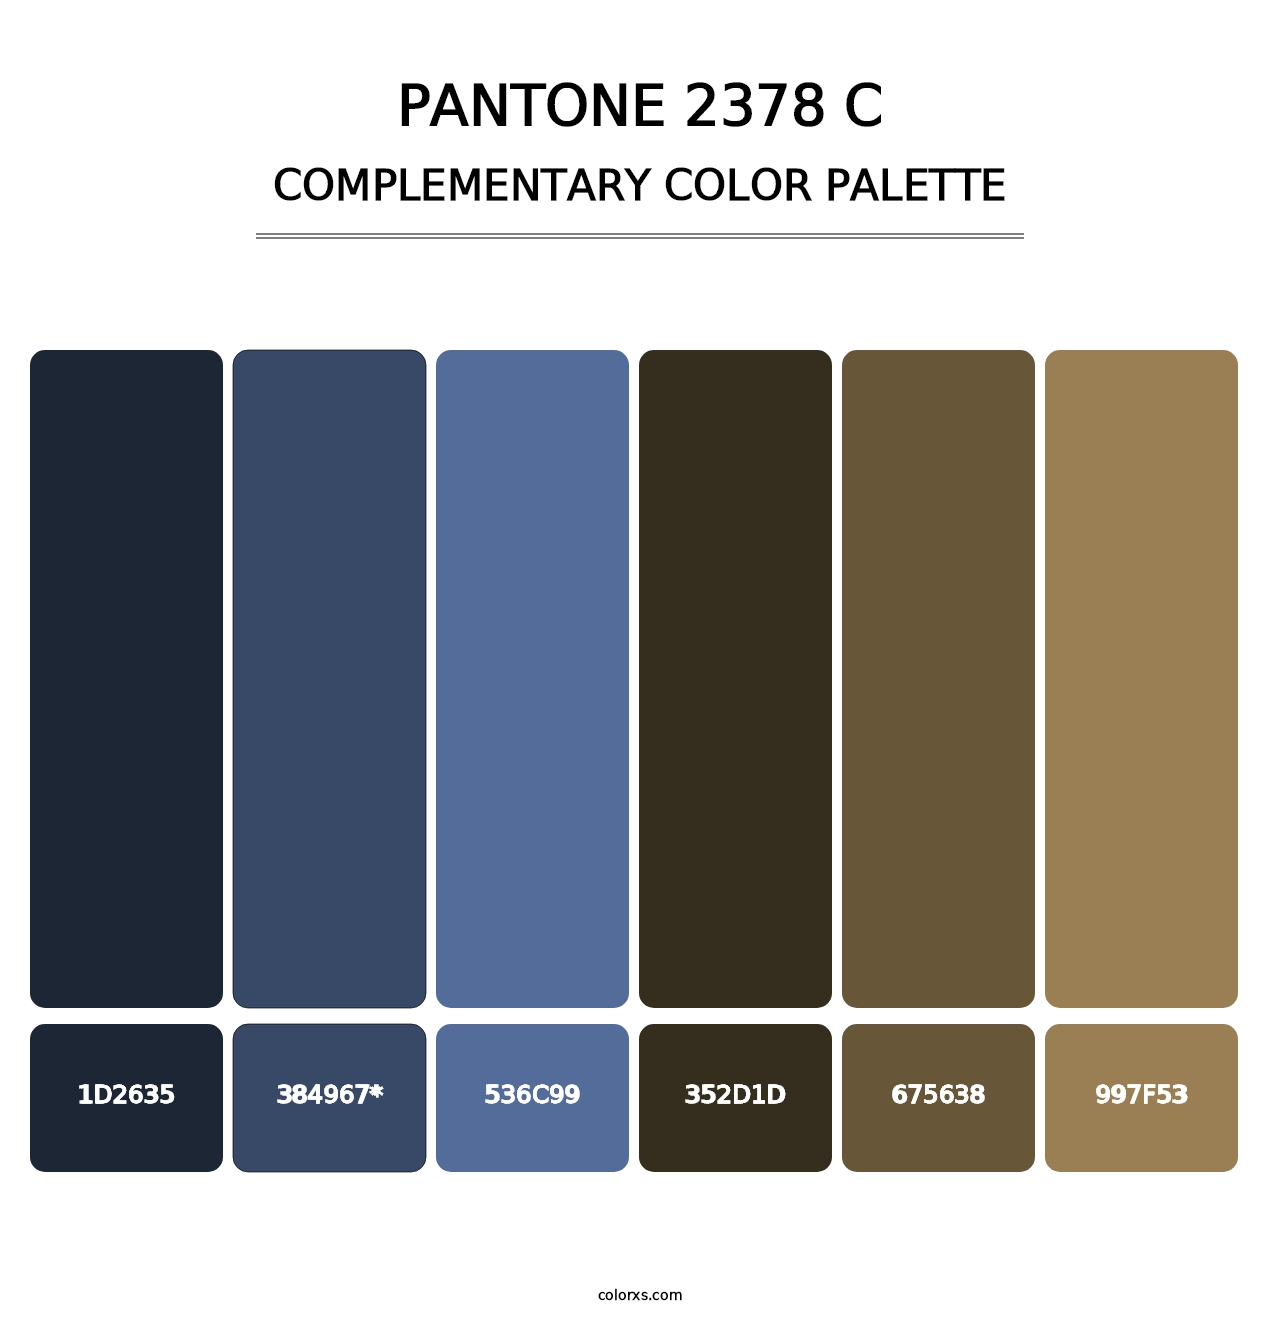 PANTONE 2378 C - Complementary Color Palette